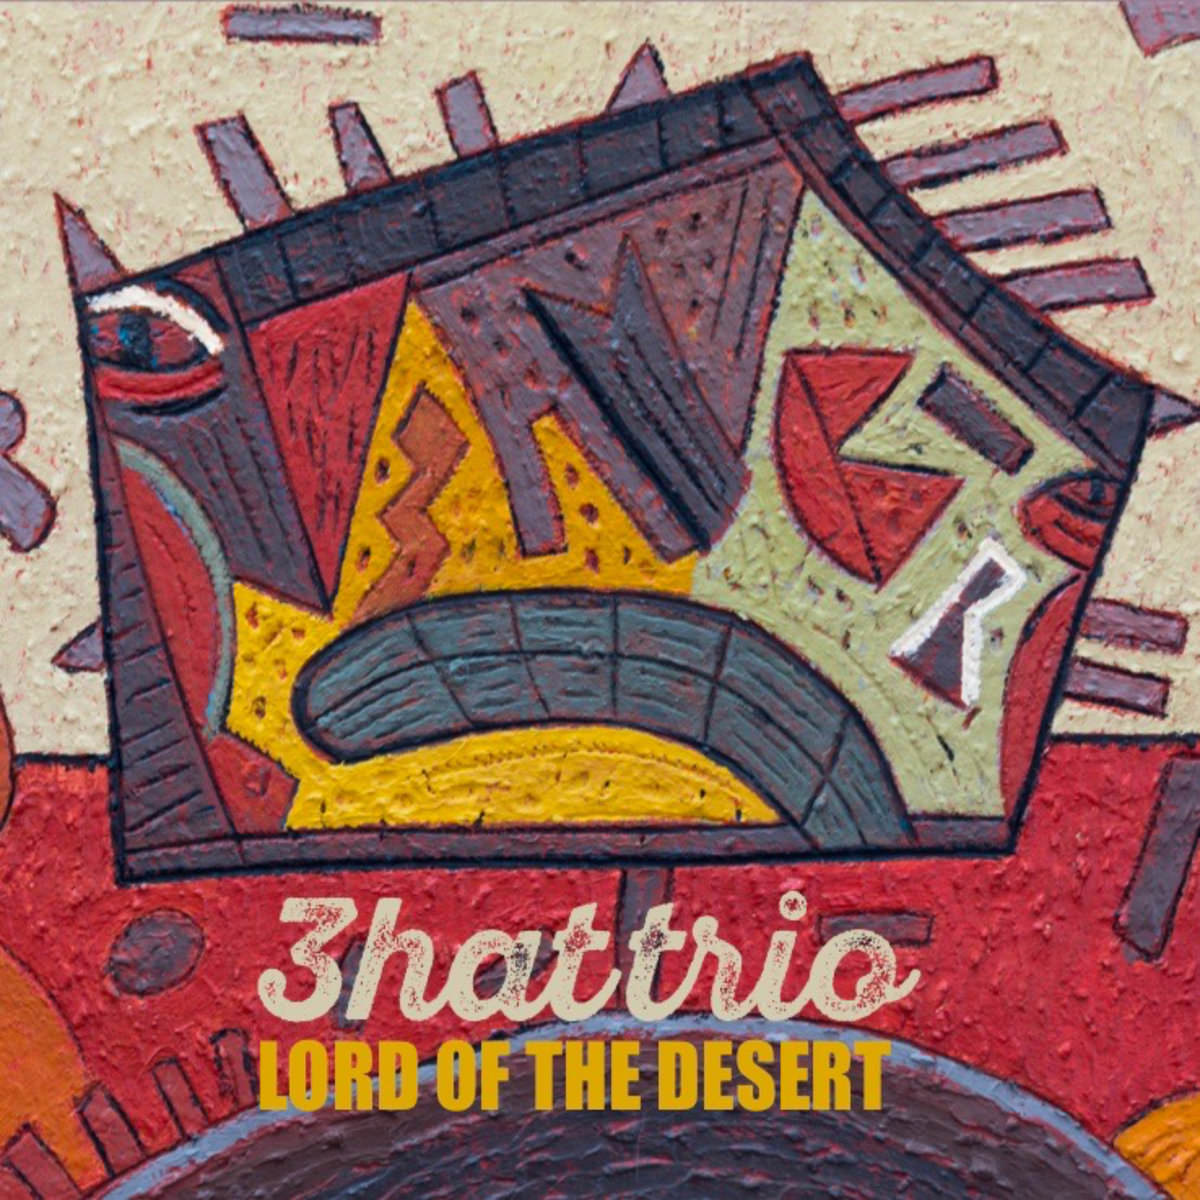 3hattrio - Lord of the Desert (2018) [Bandcamp FLAC 24bit/44,1kHz]